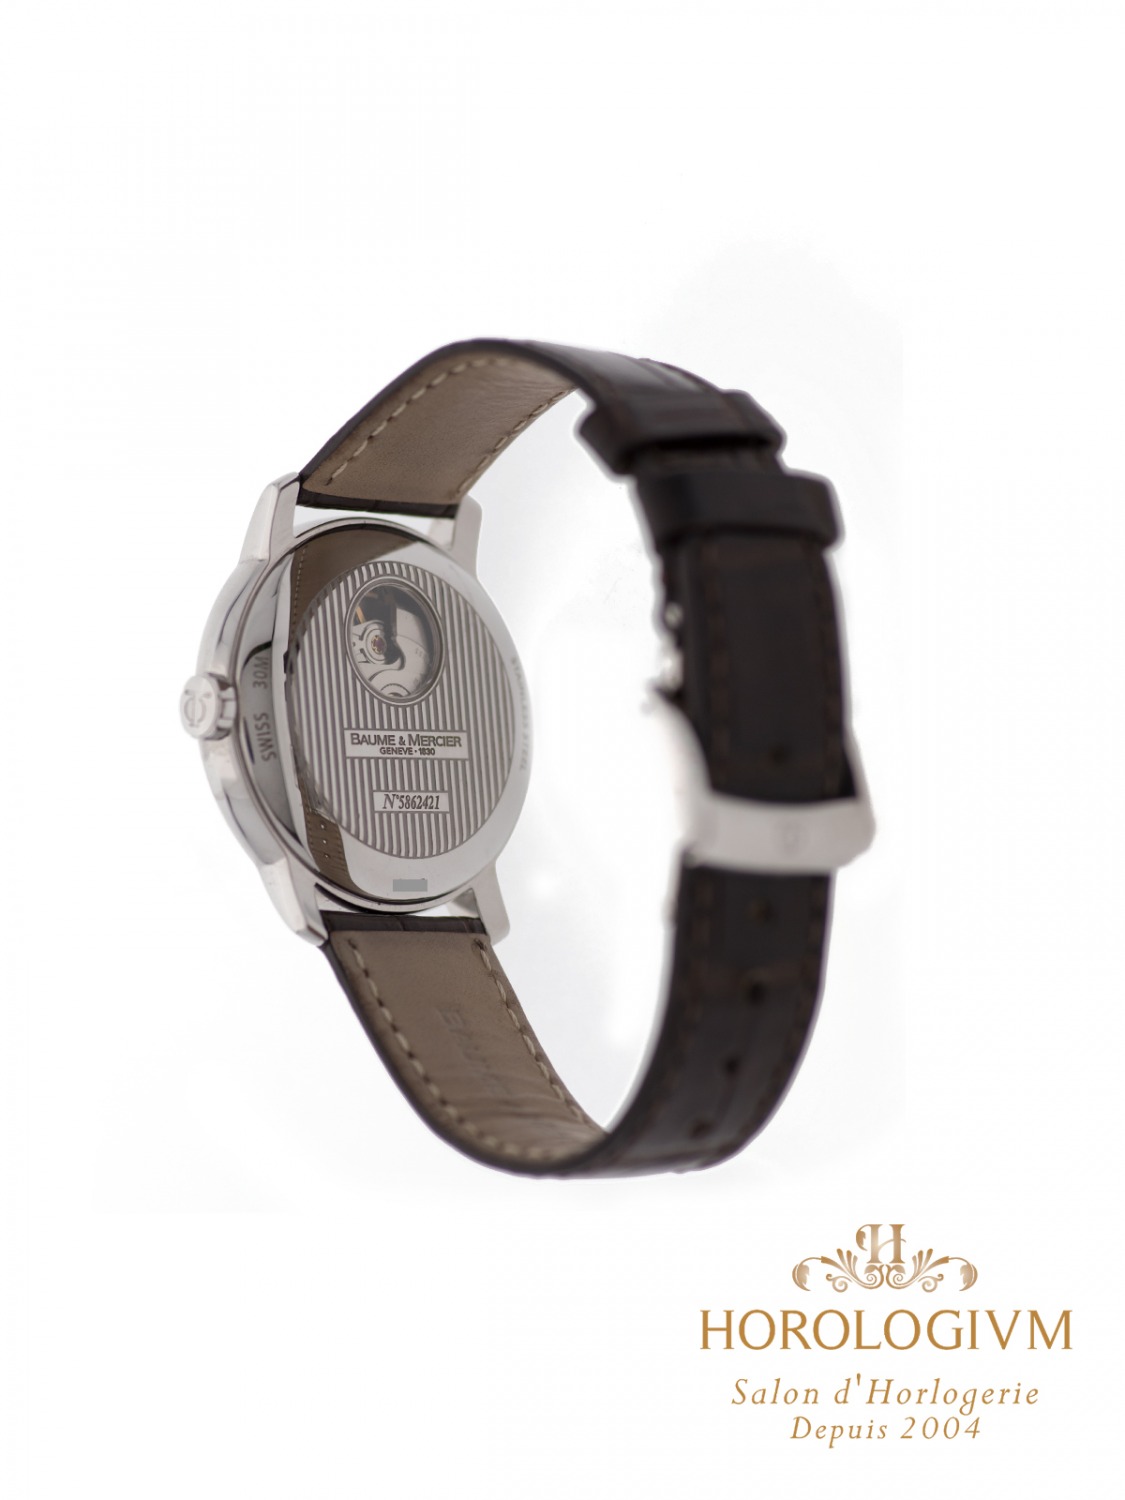 Baume & Mercier Classima Automatic Ref. 65615 watch, silver